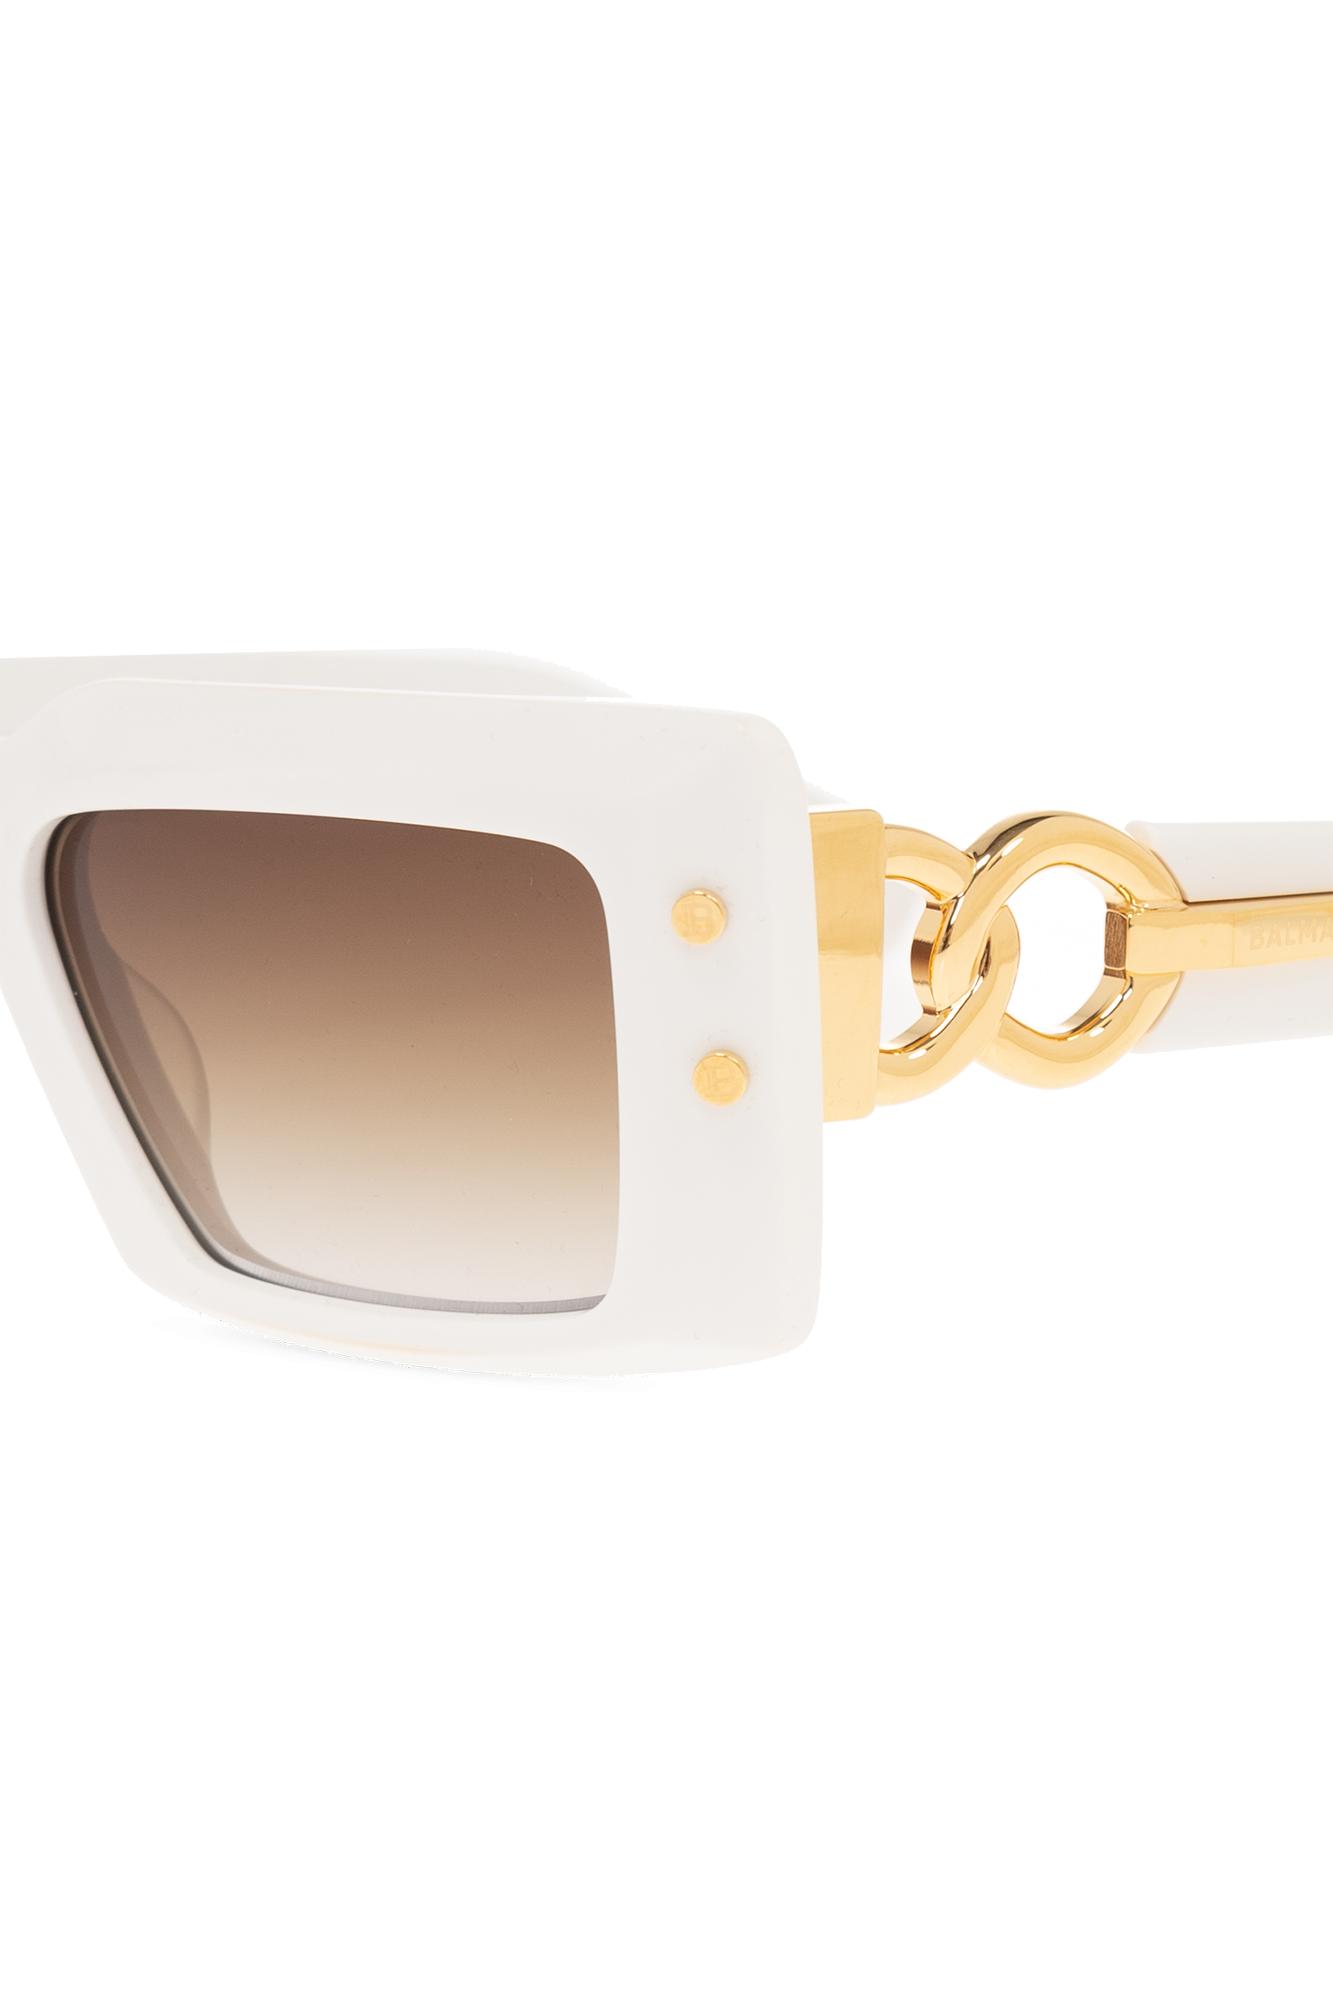 Balmain B-III Sunglasses